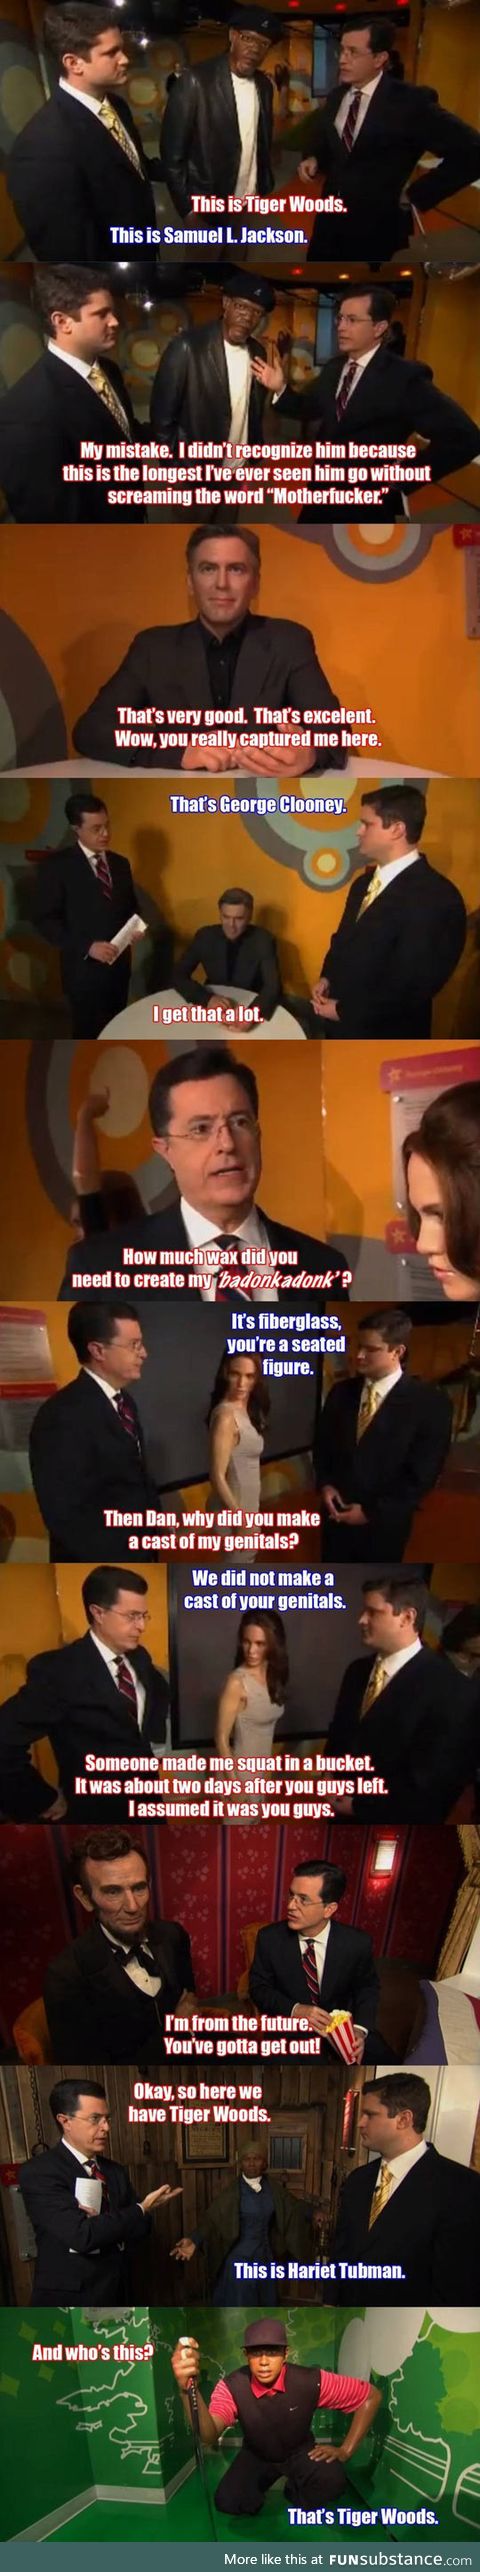 Colbert visits a wax museum